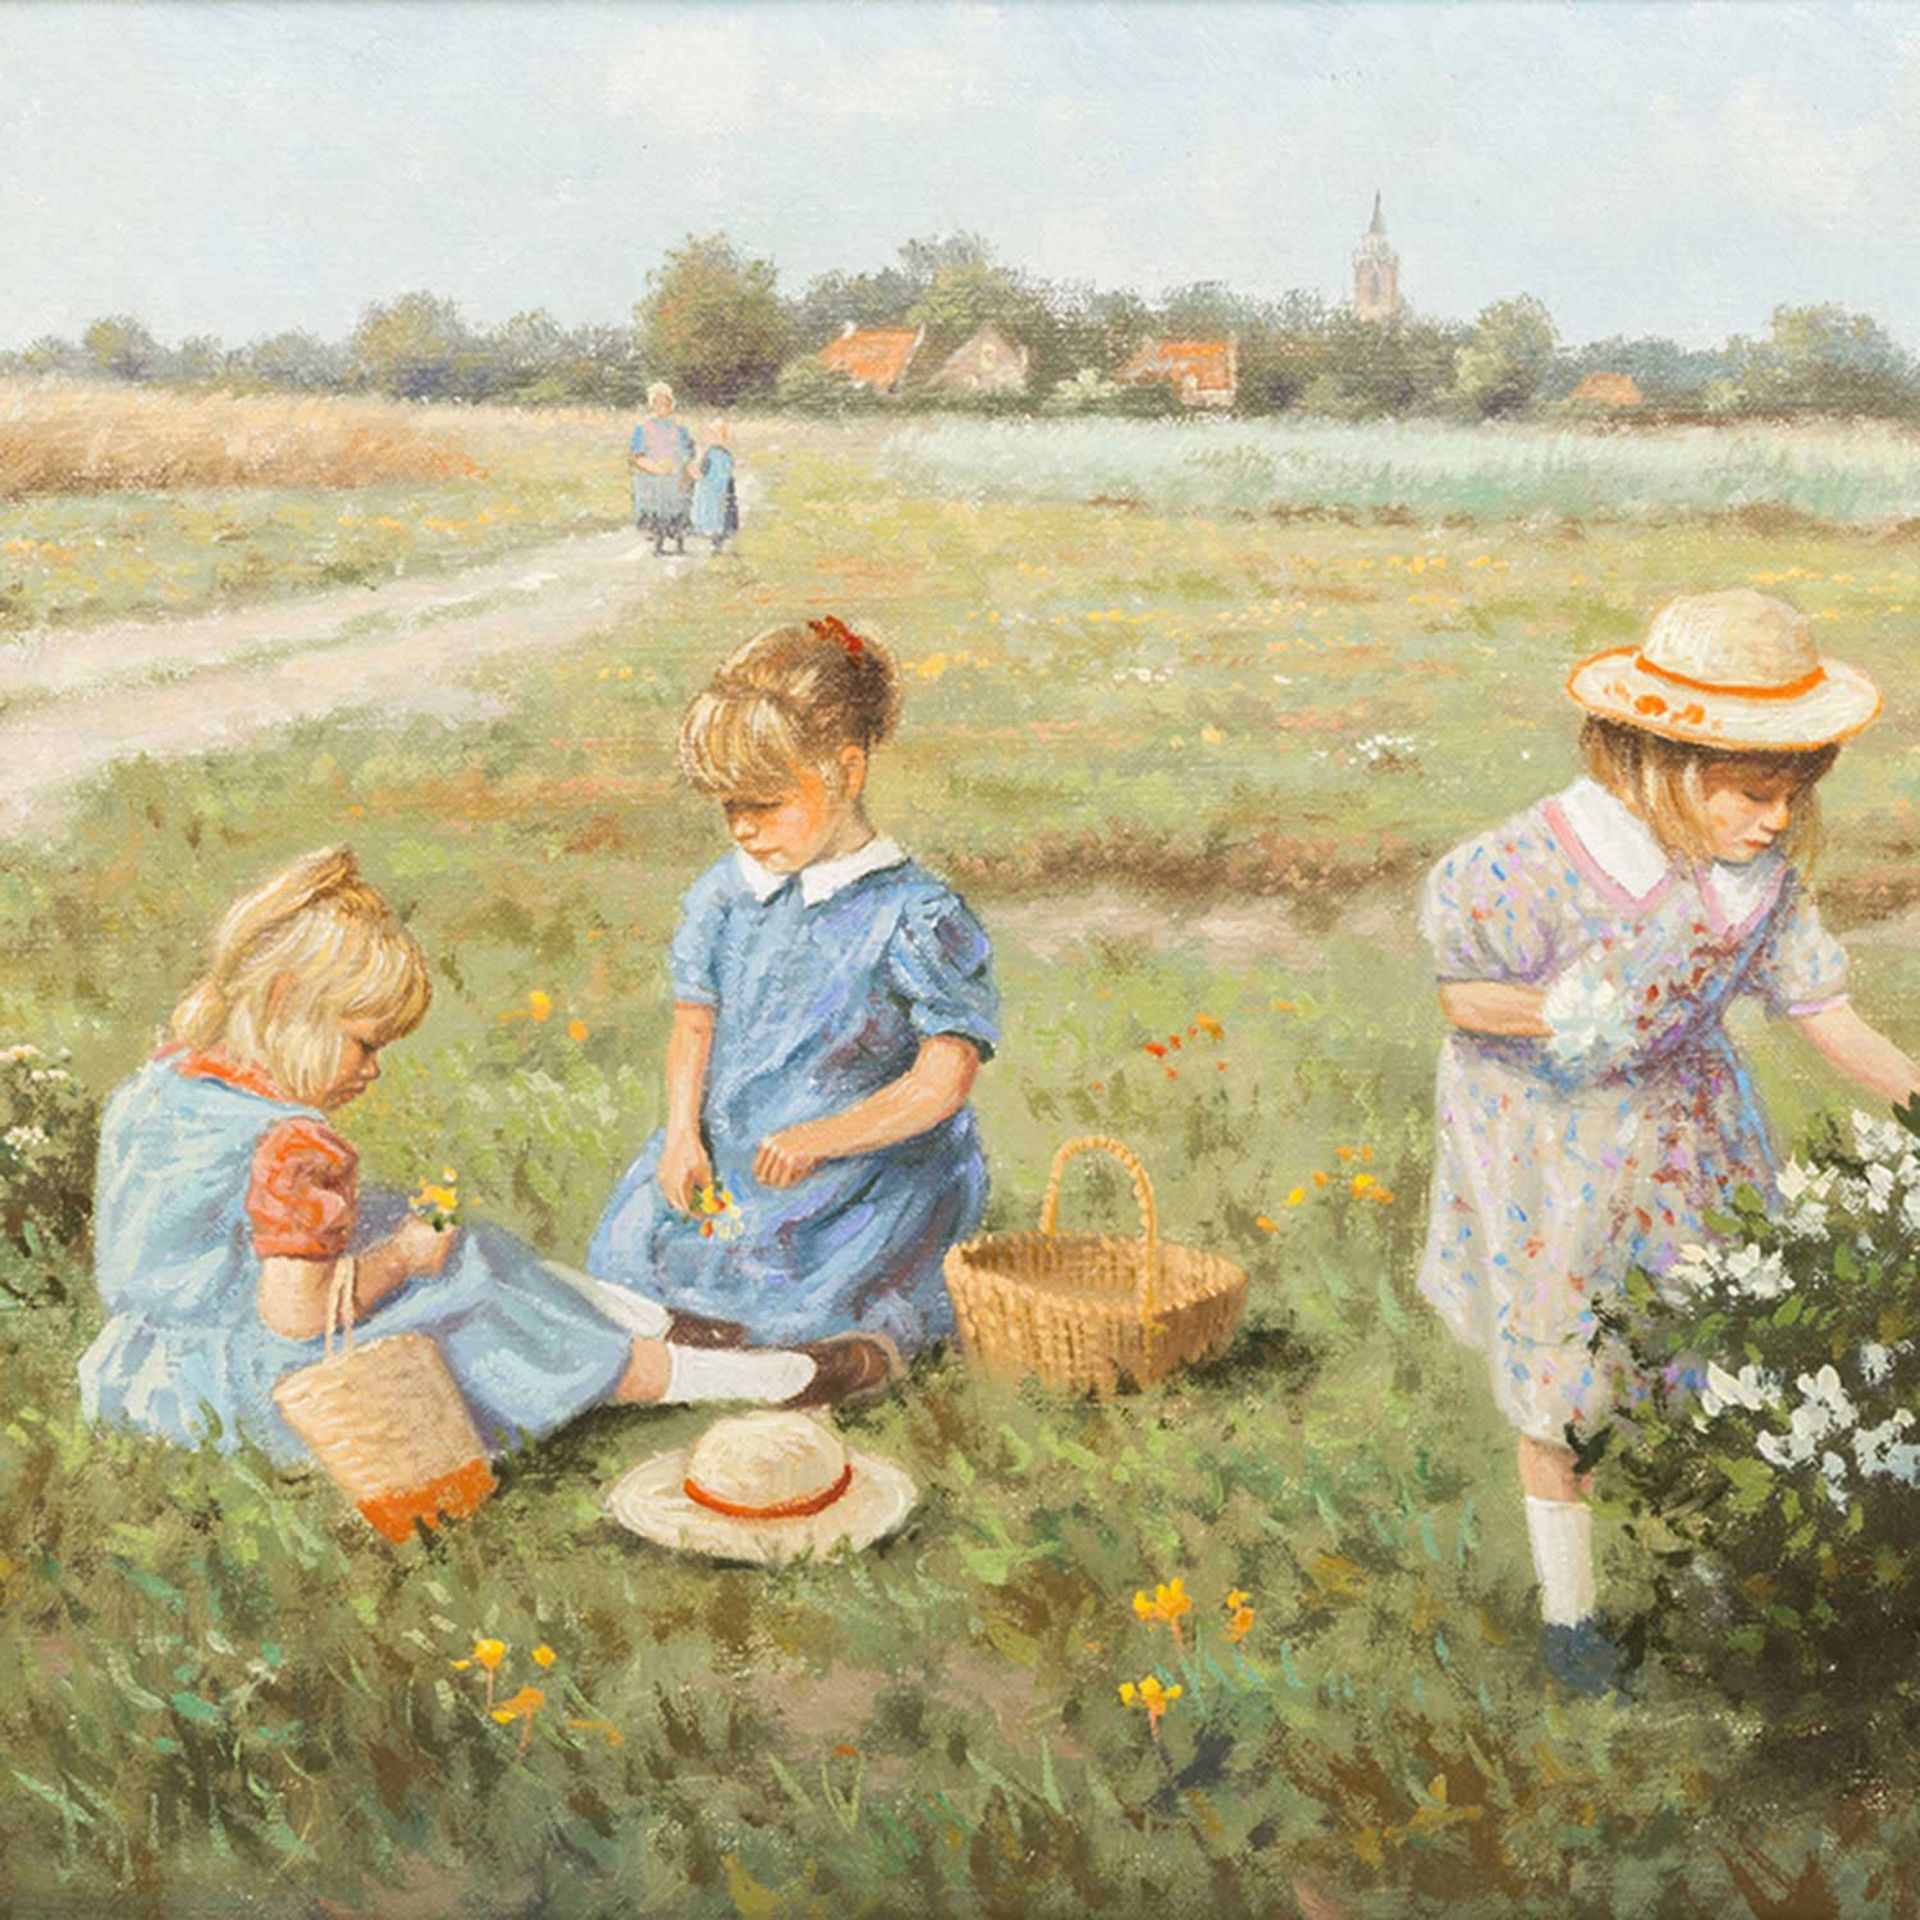 MEILOF, RON (Maler 20. Jh.), "Blumen pflückende Kinder", u.re. sign., Öl auf Leinwand, ca. 30x54